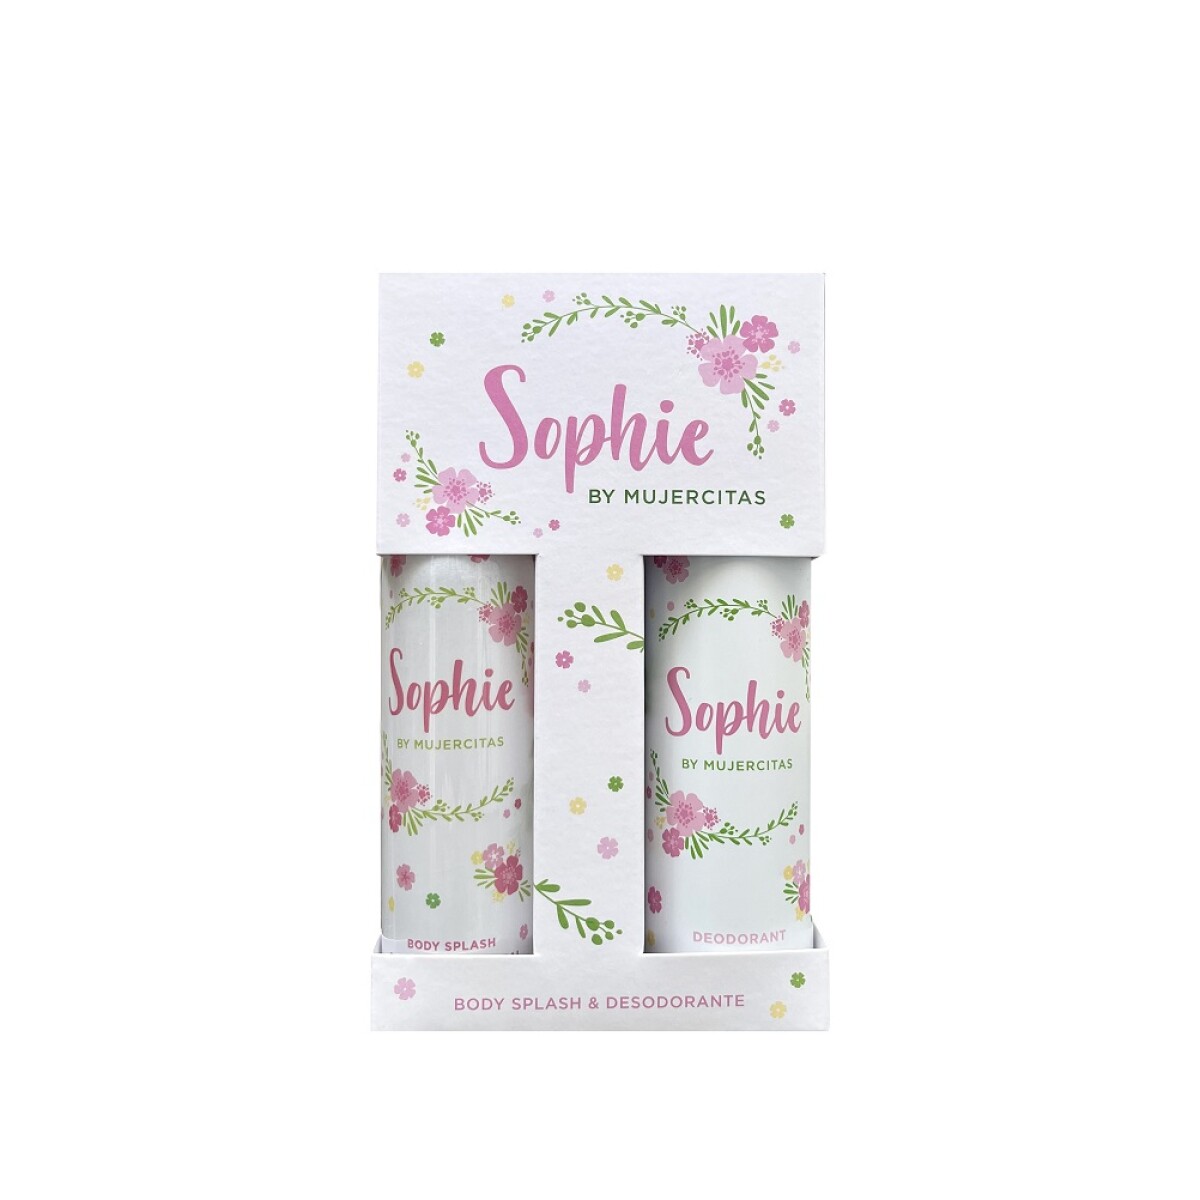 Body Splash Sophie 125ml + Desodorante 123ml. 